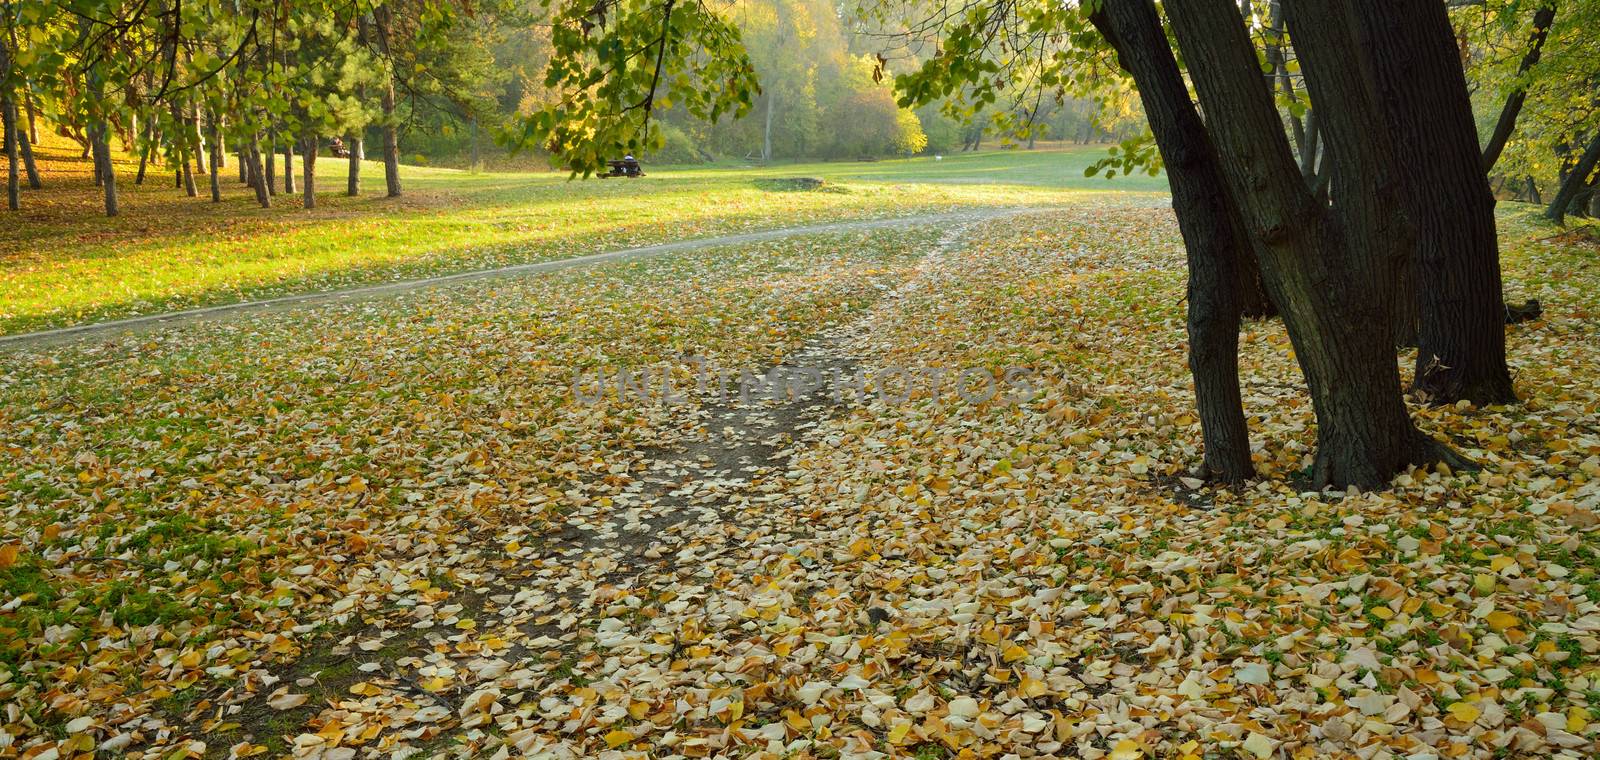 Autumn in park by zagart36